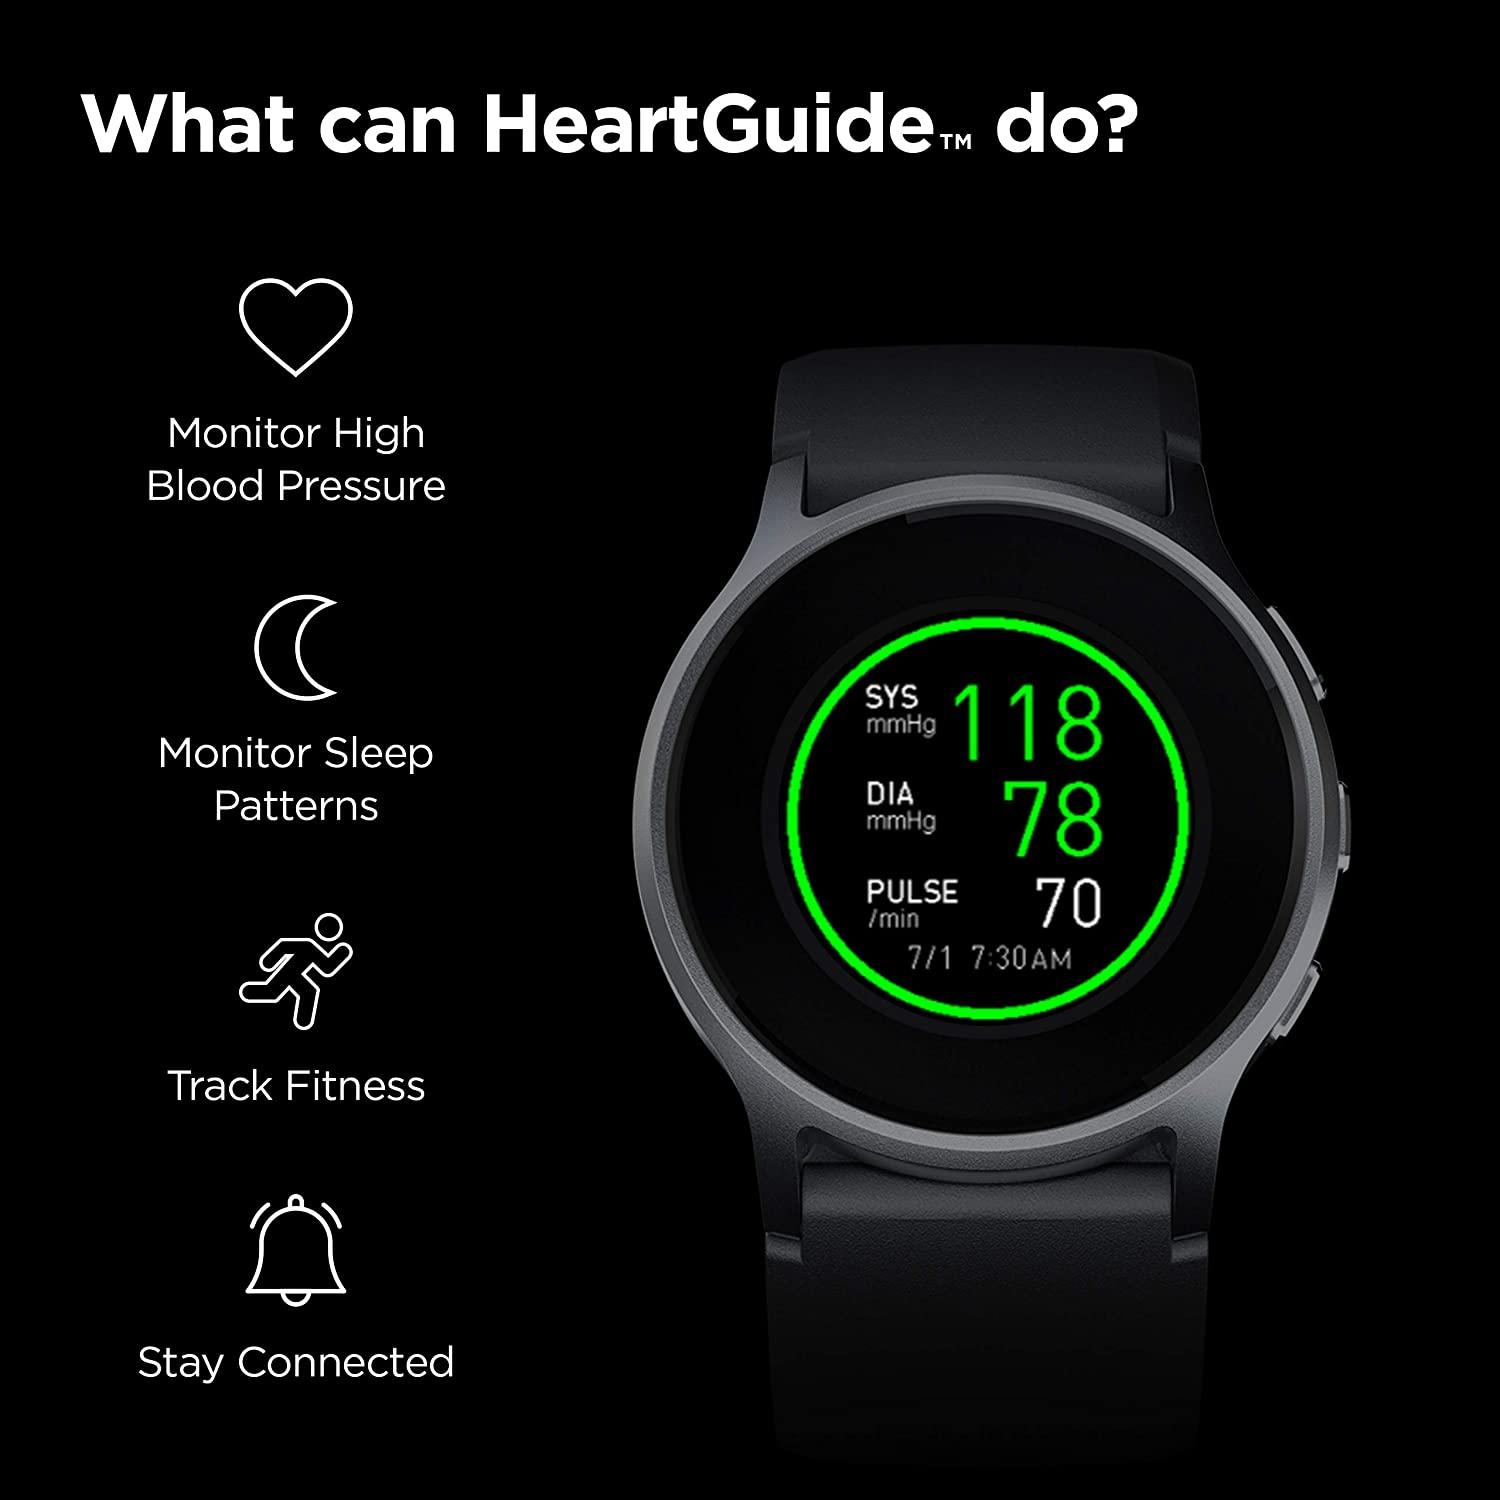 Omron - Heartguide Smart Watch Blood Pressure Monitor